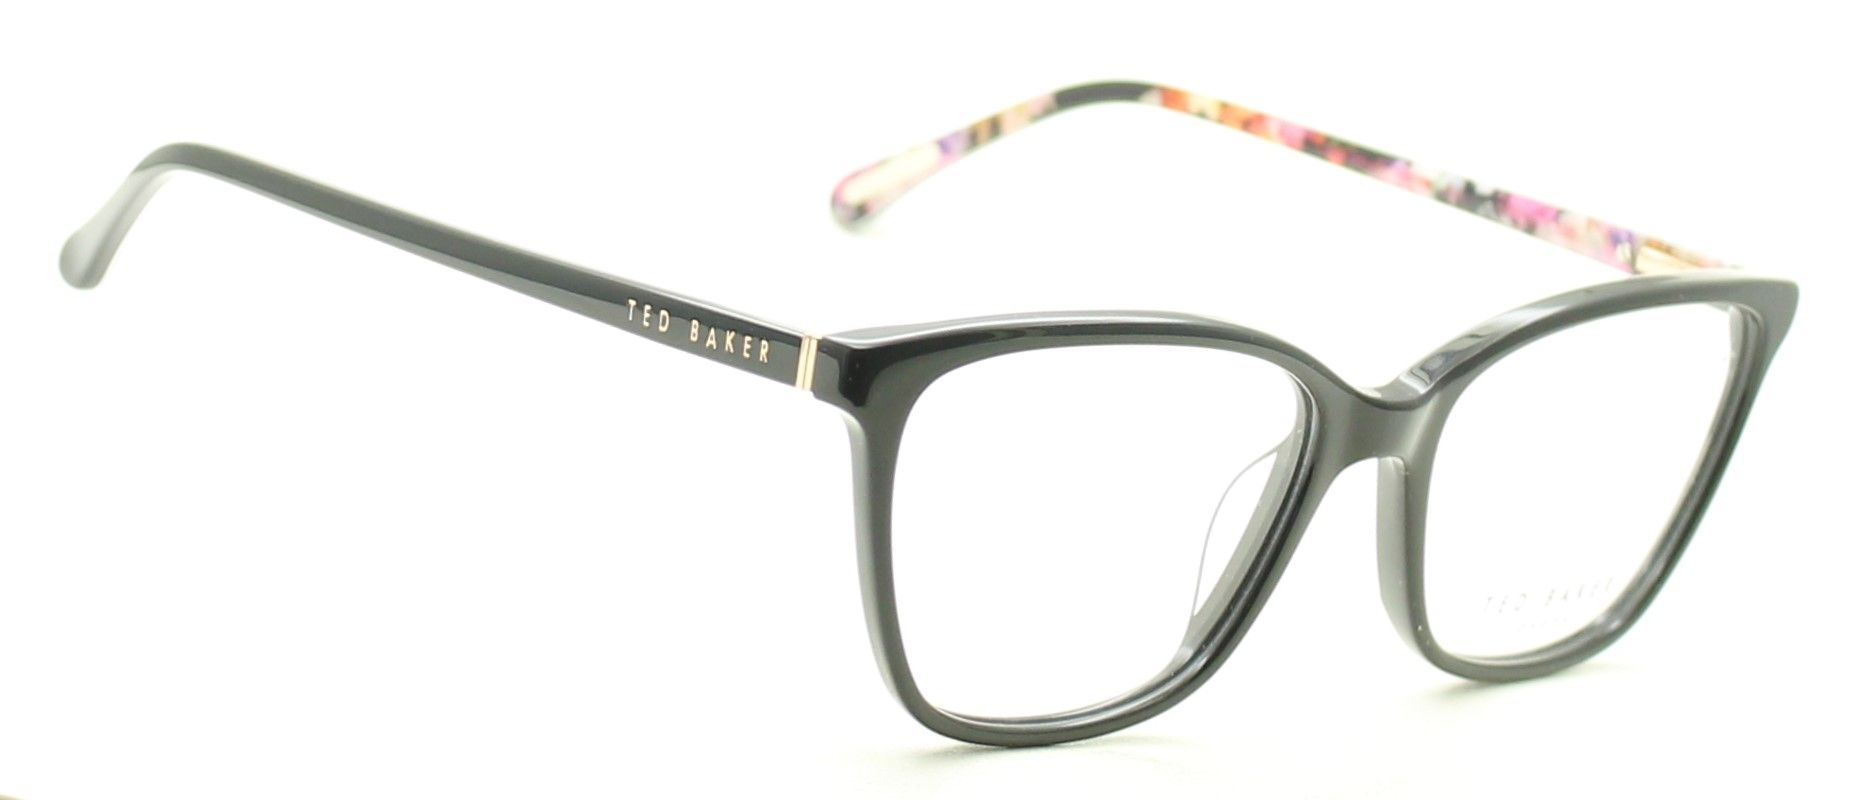 TED BAKER Sew What? 9112 001 Eyewear FRAMES Glasses 